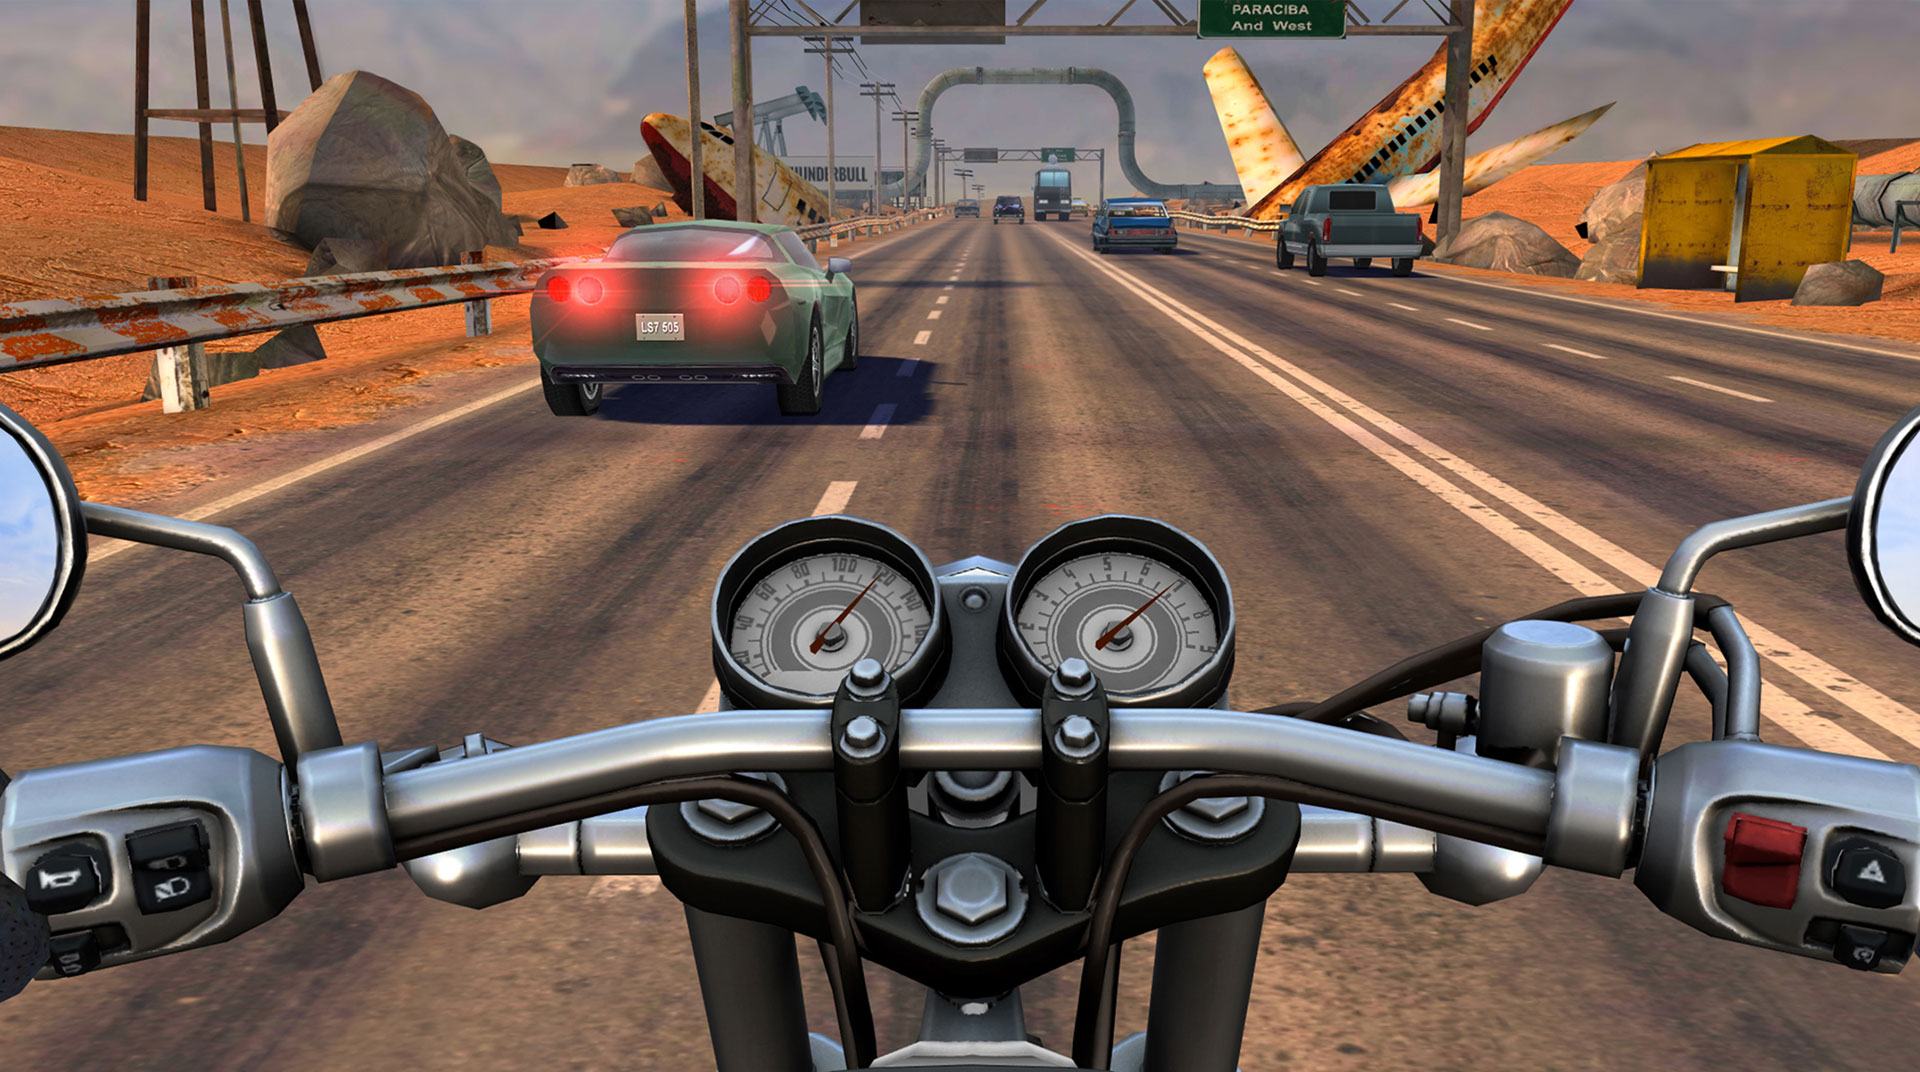 moto rider in traffic